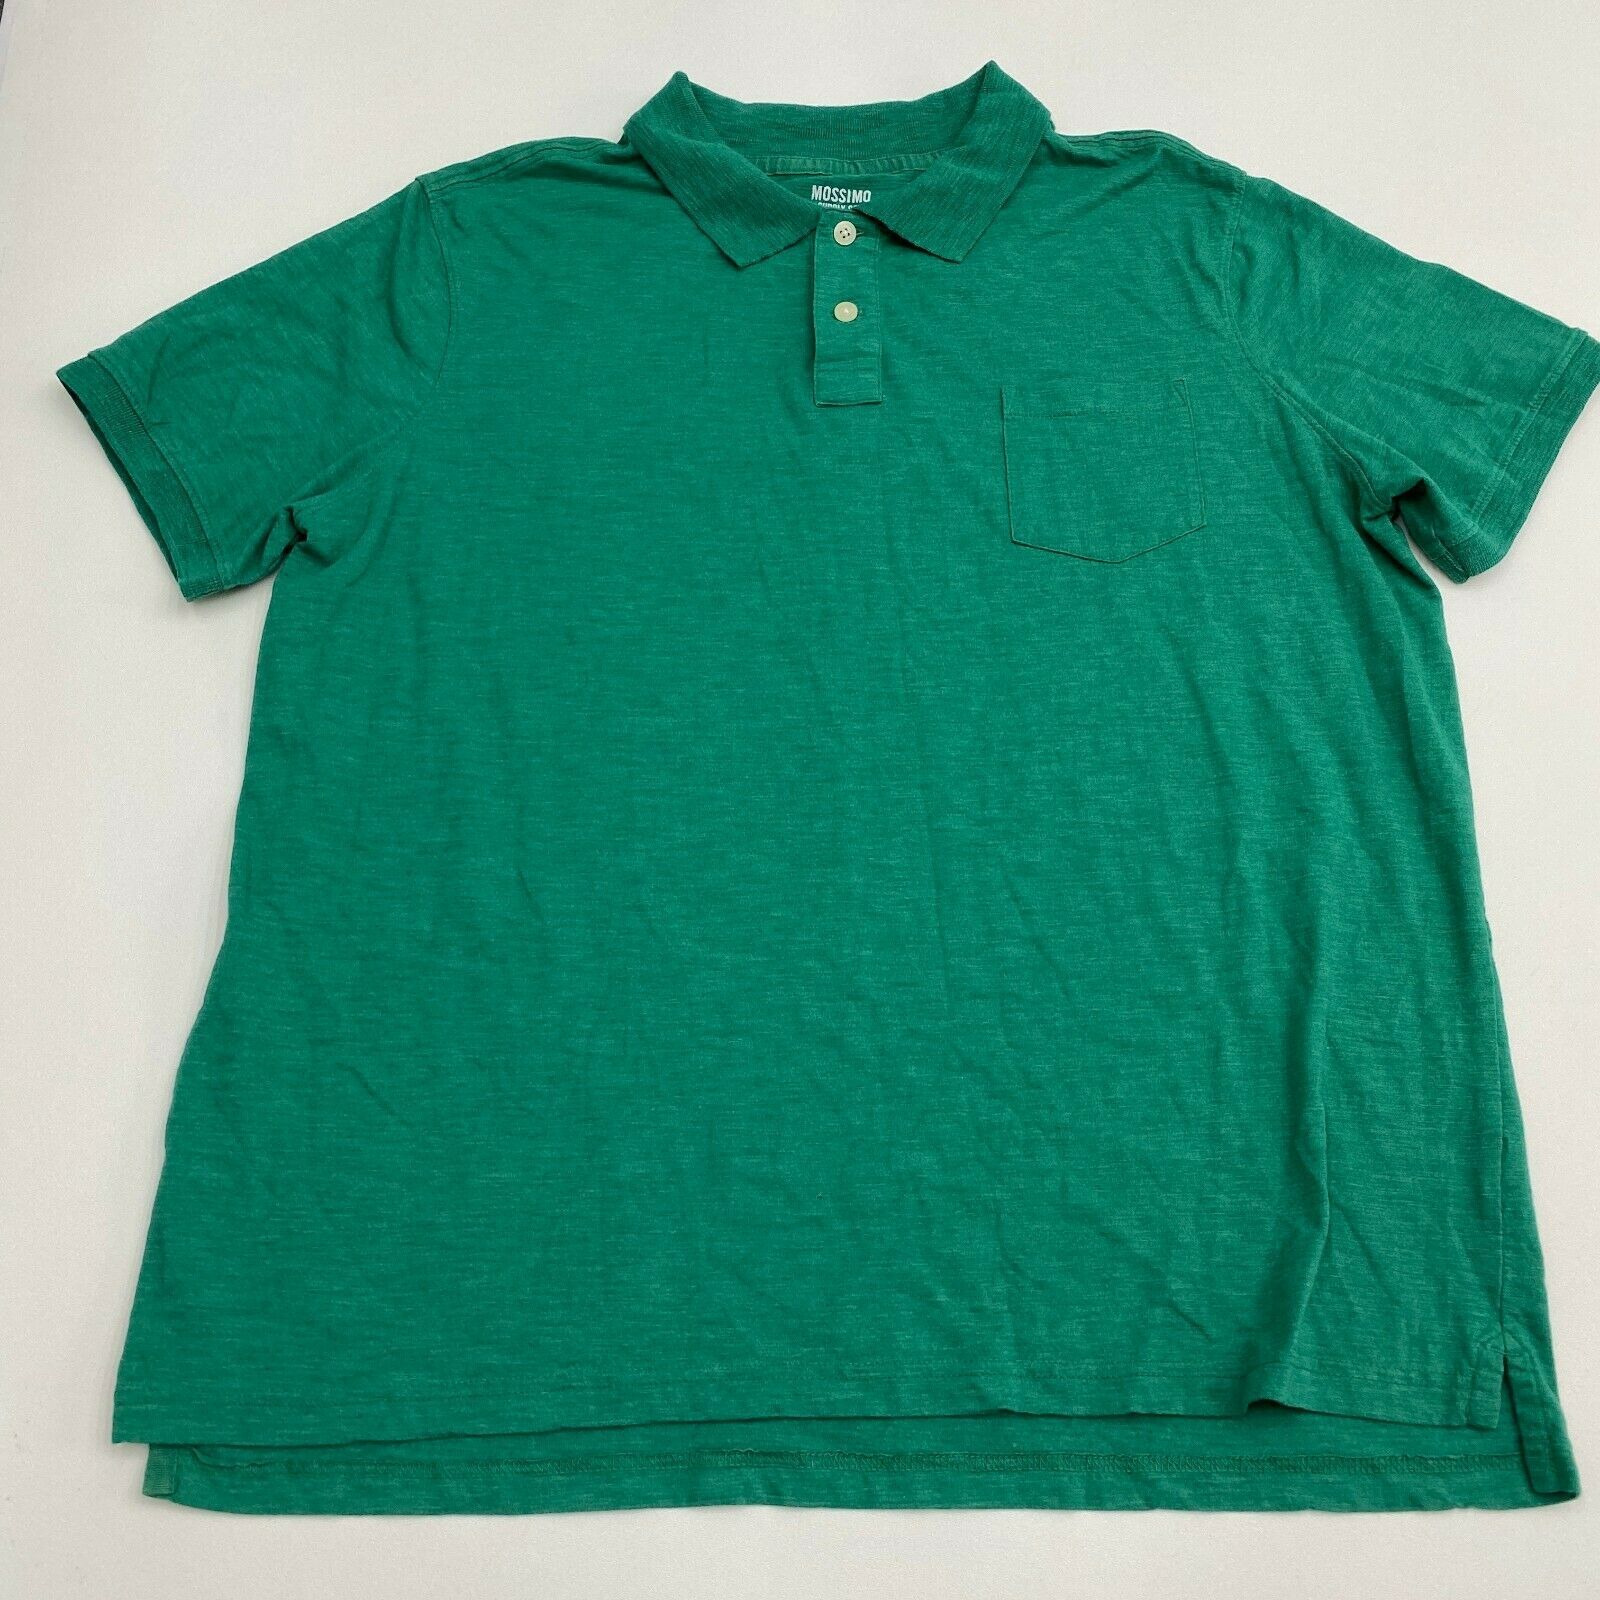 Mossimo Polo Shirt Mens XXL Green Athletic Cut Short Sleeve Casual - Polos